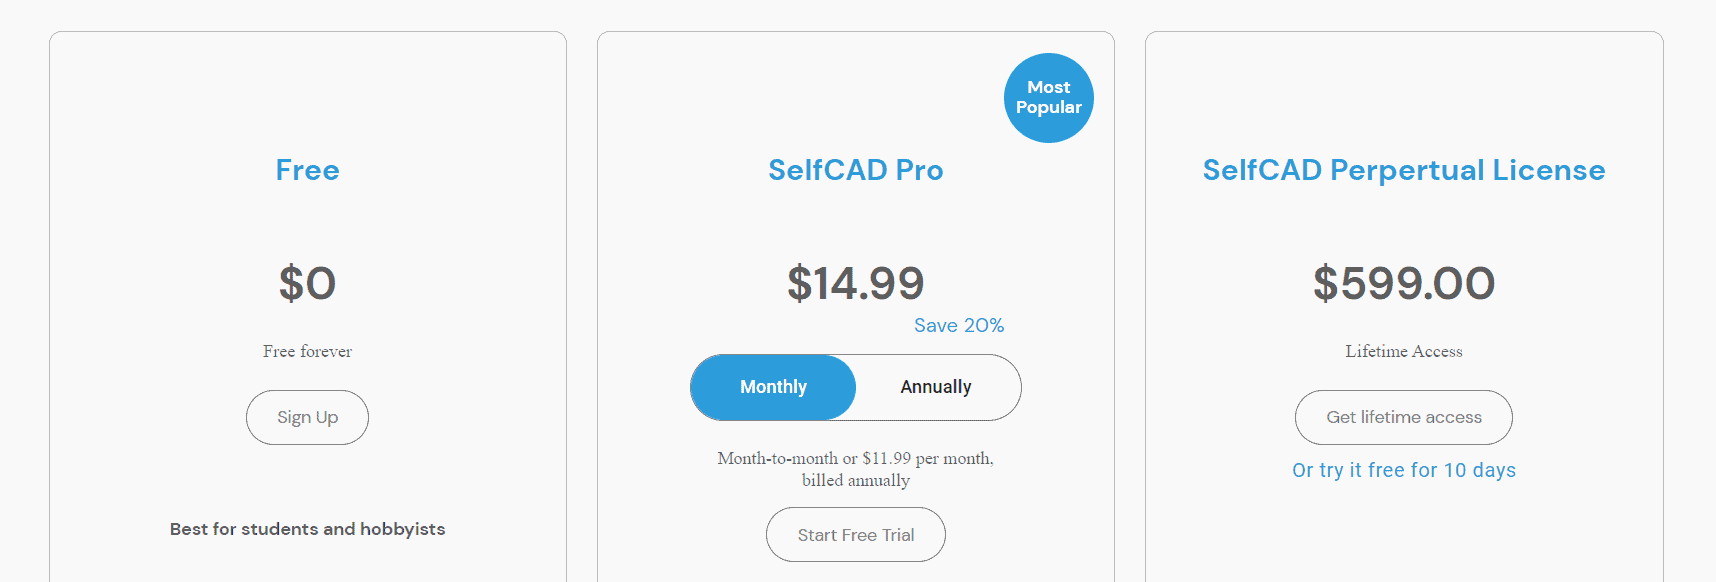 SelfCAD Price 